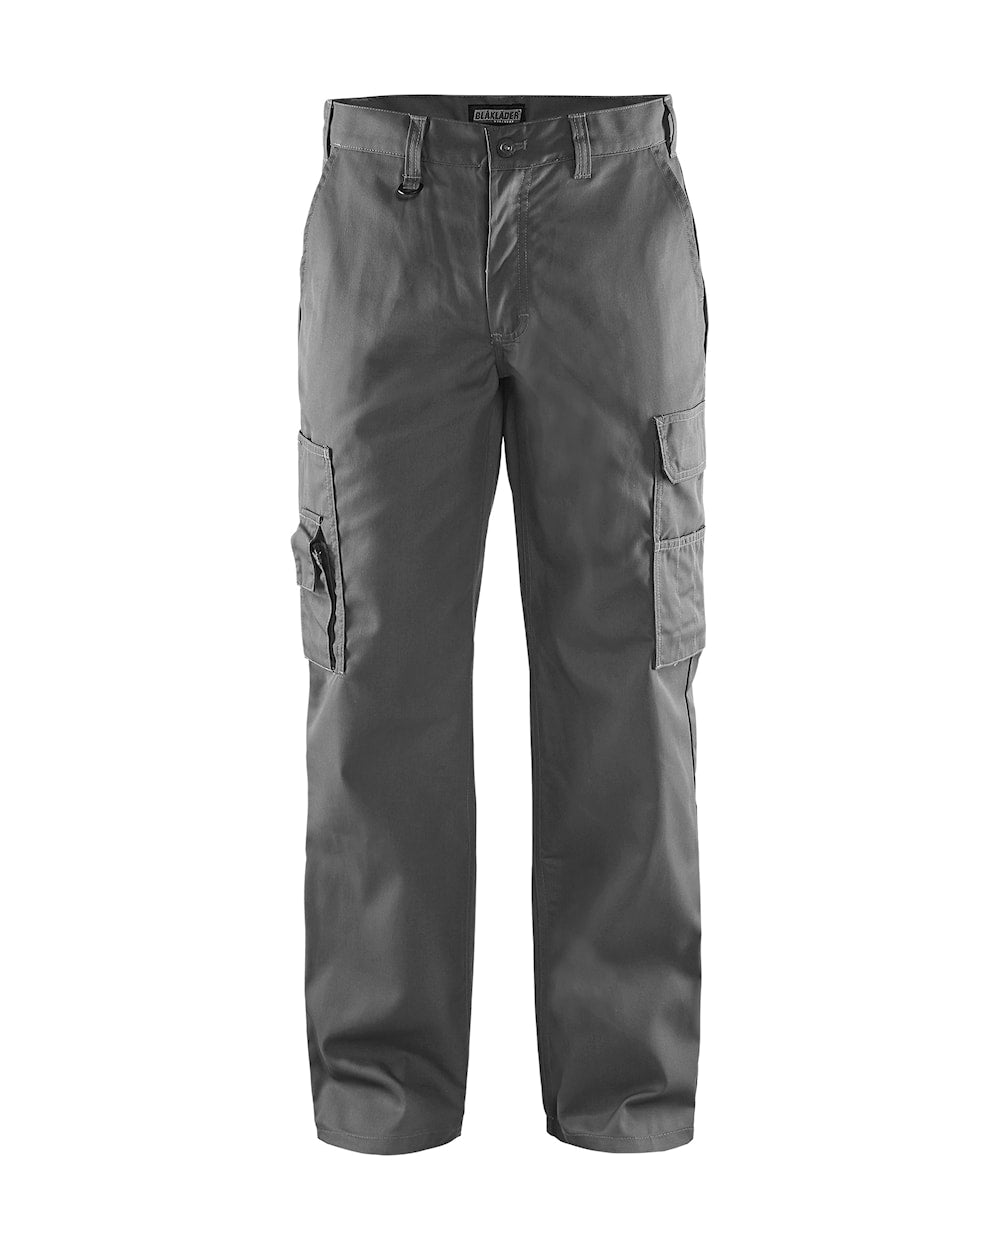 Blaklader Cargo Trousers 14001800 - Grey